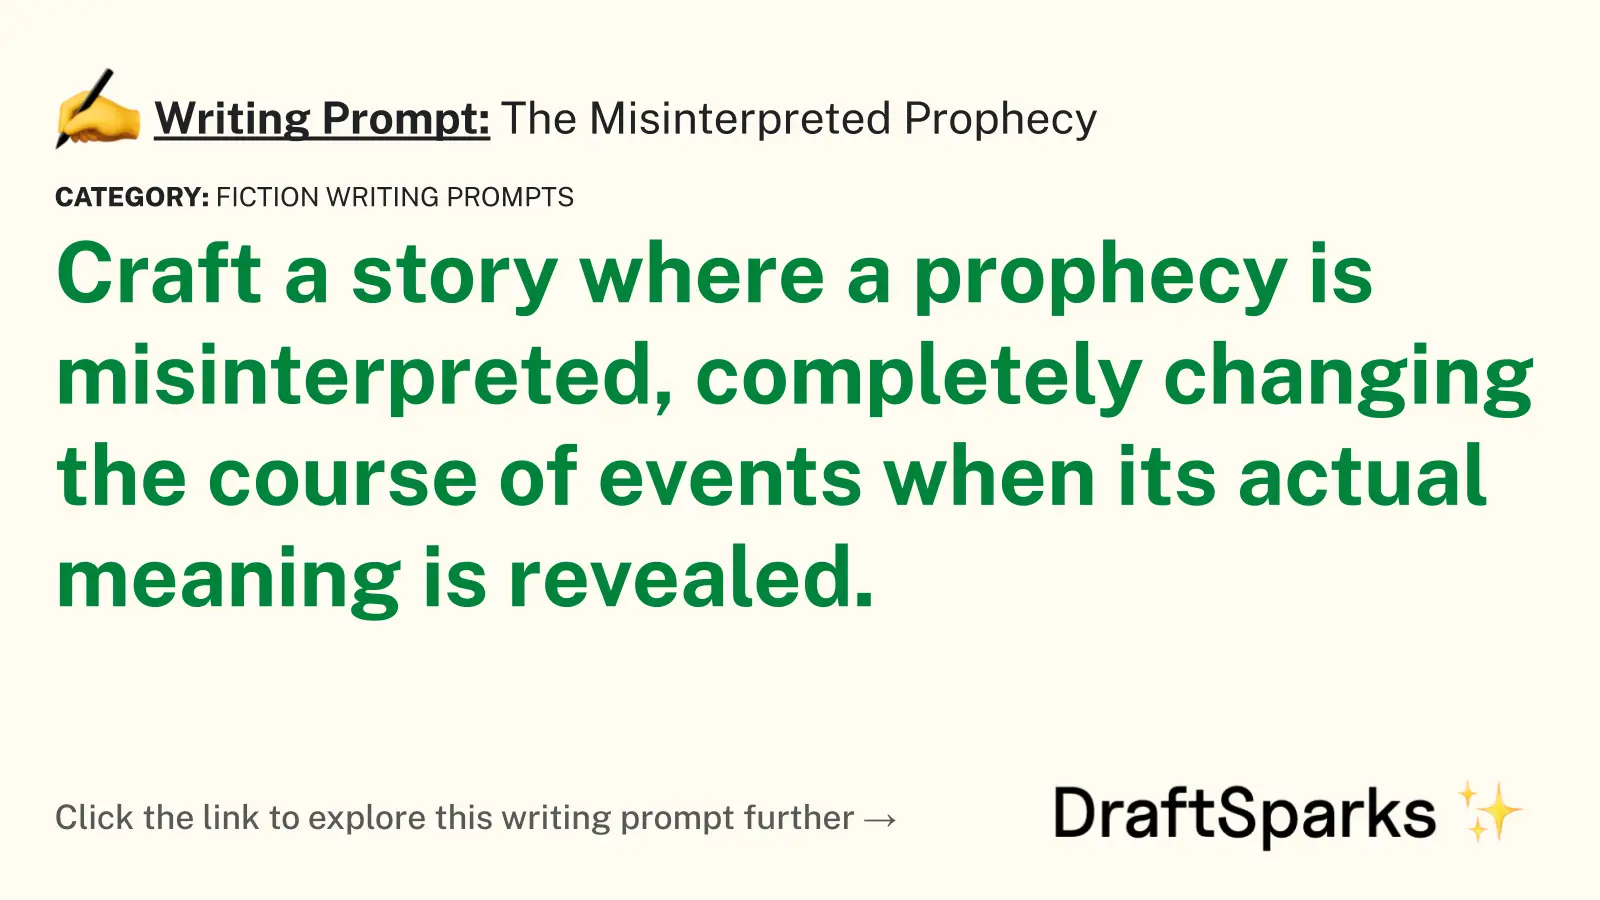 The Misinterpreted Prophecy